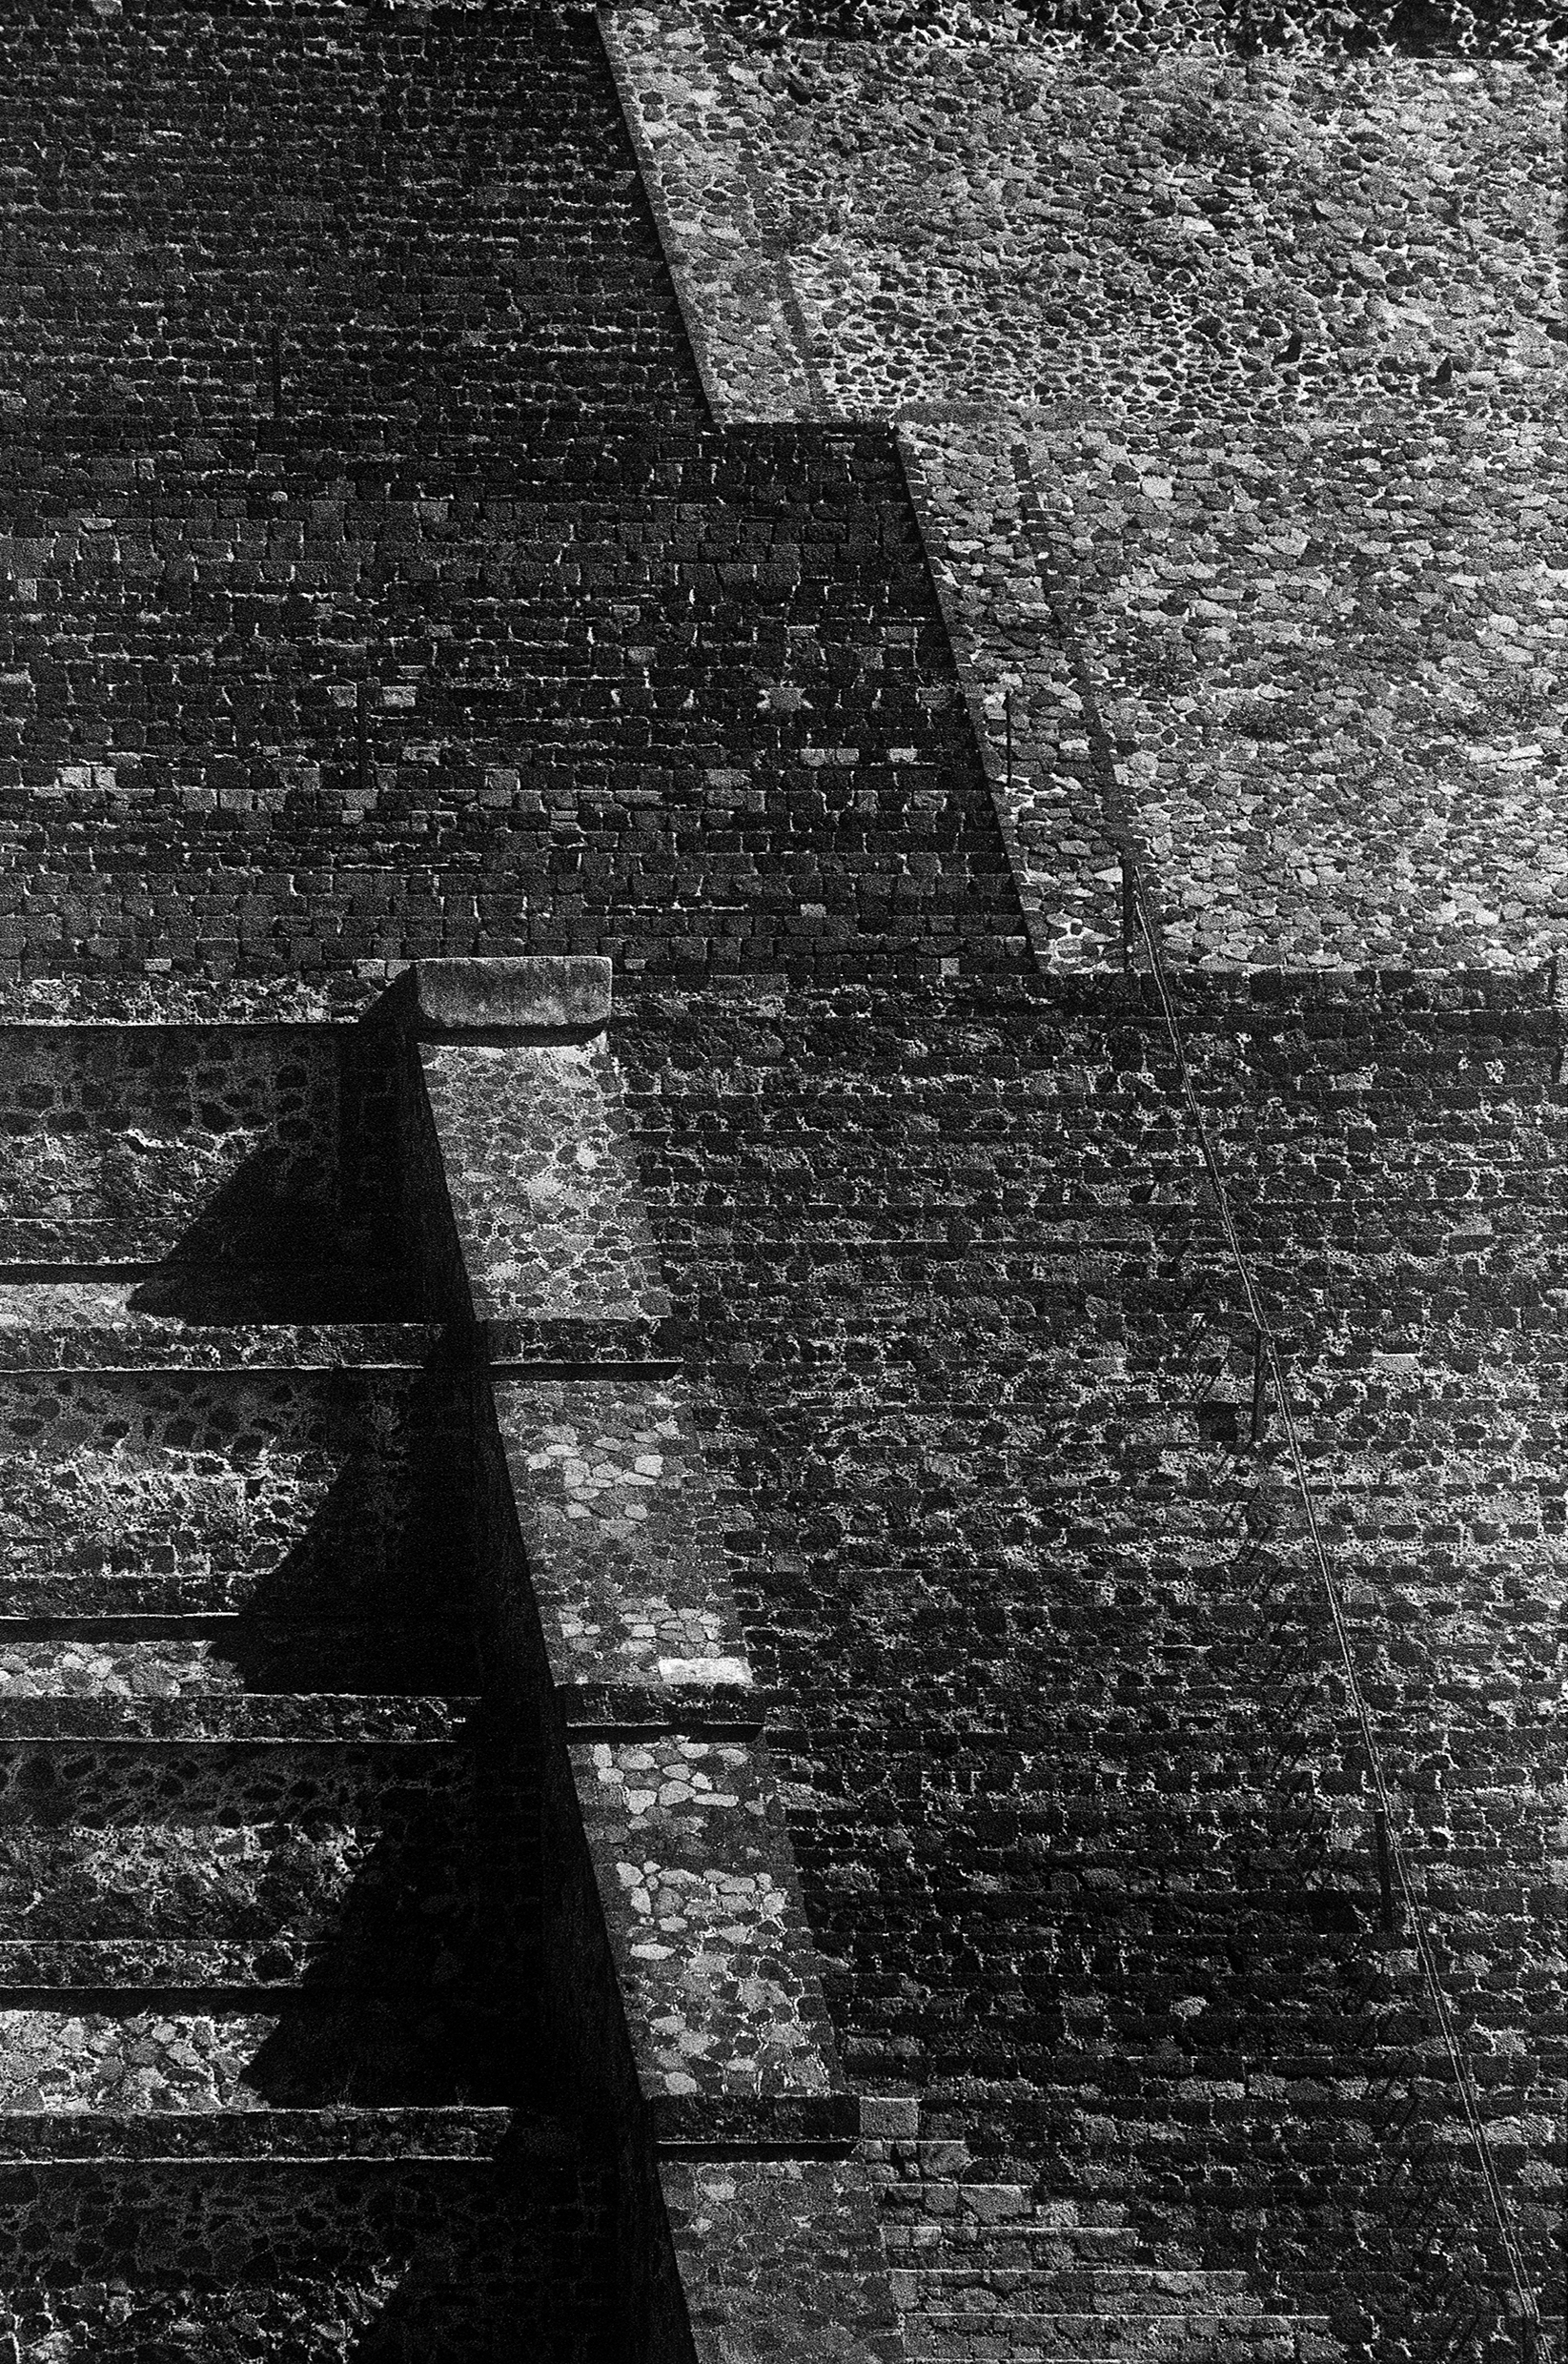 Pyramid of the Moon 2 
(2023, 59,5 x 38,5 cm, silver print)